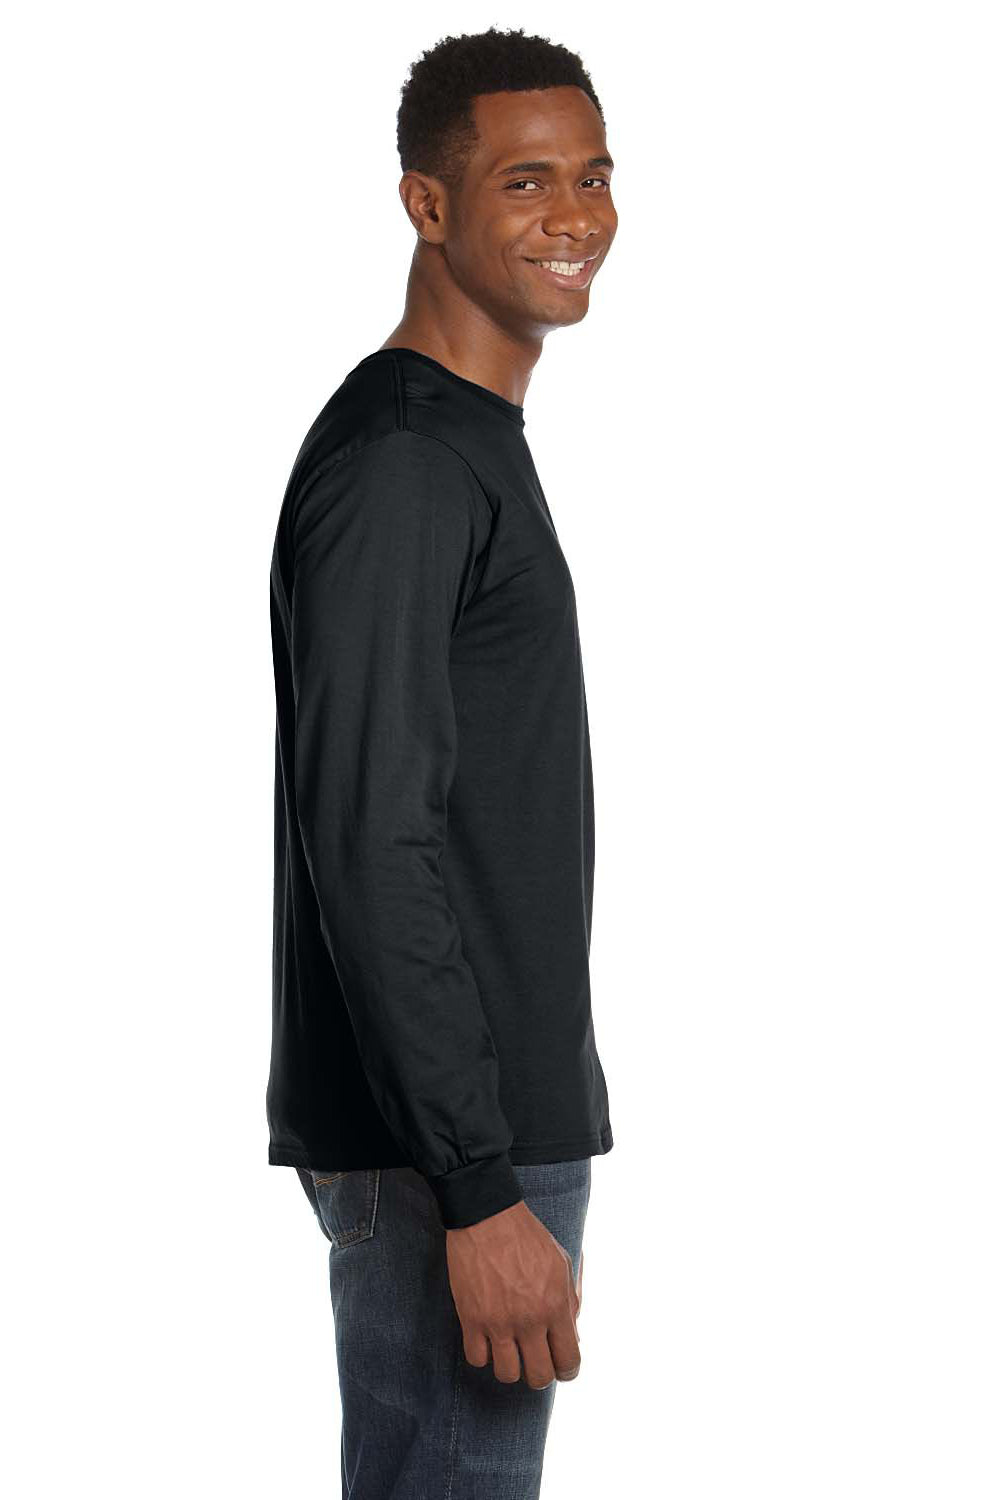 Anvil 949 Mens Long Sleeve Crewneck T-Shirt Black Side